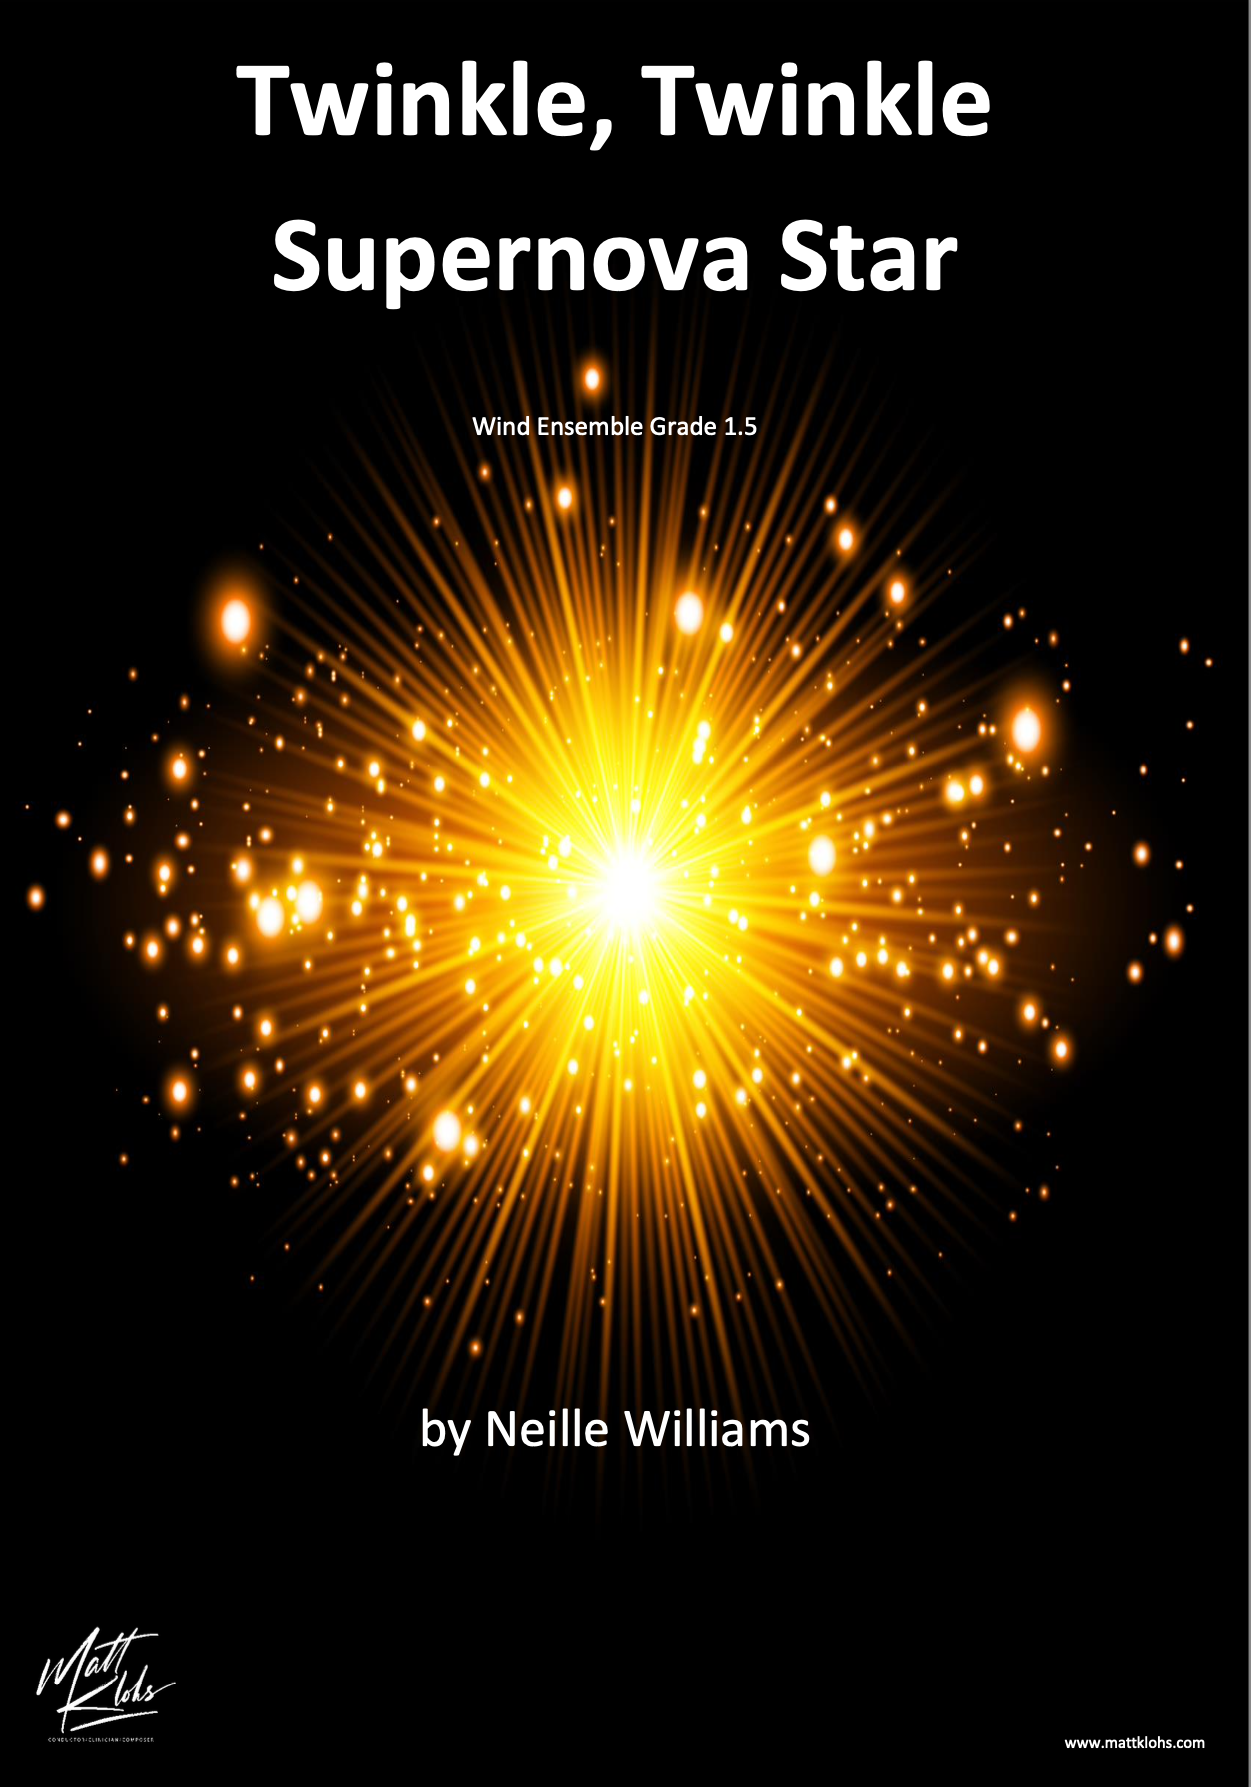 Twinkle, Twinkle Supernova Star by Neillie Williams